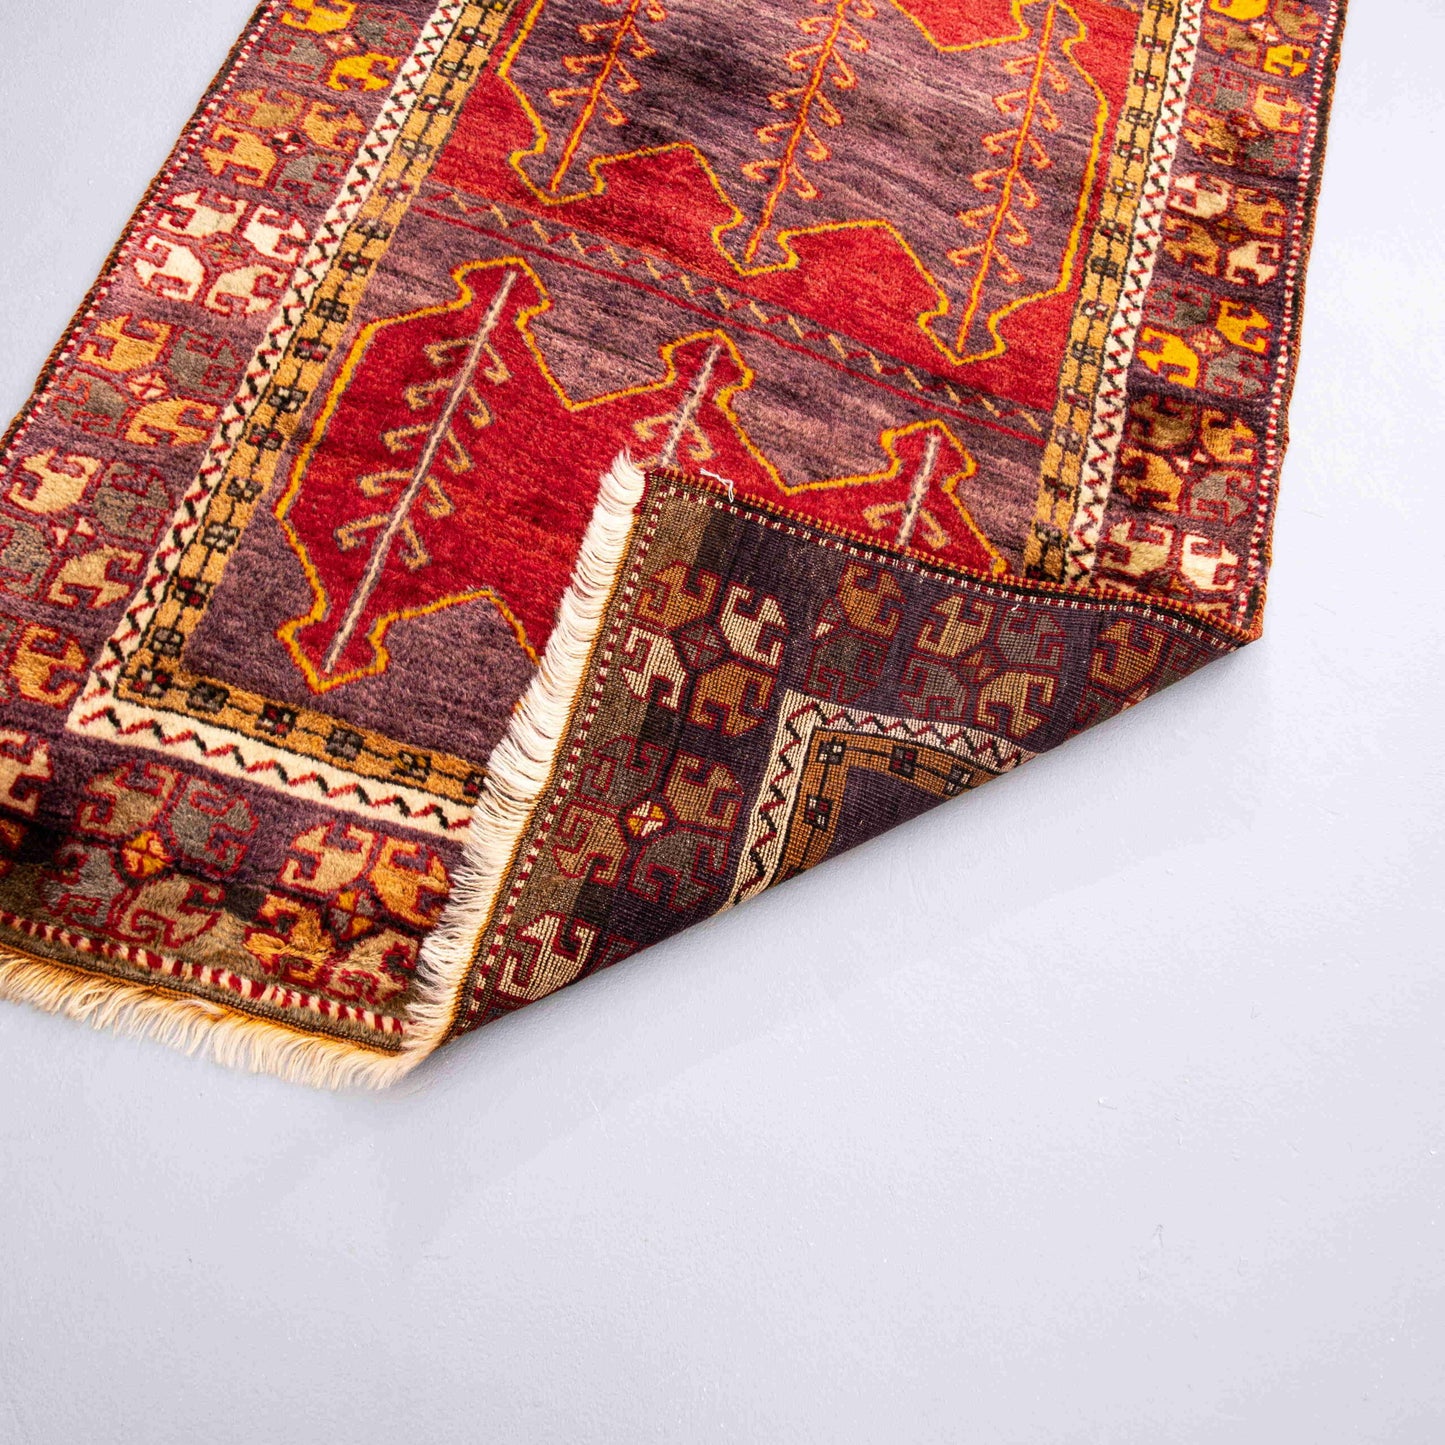 Oriental Rug Anatolian Handmade Wool On Wool 106 X 191 Cm - 3' 6'' X 6' 4'' Red C014 ER01